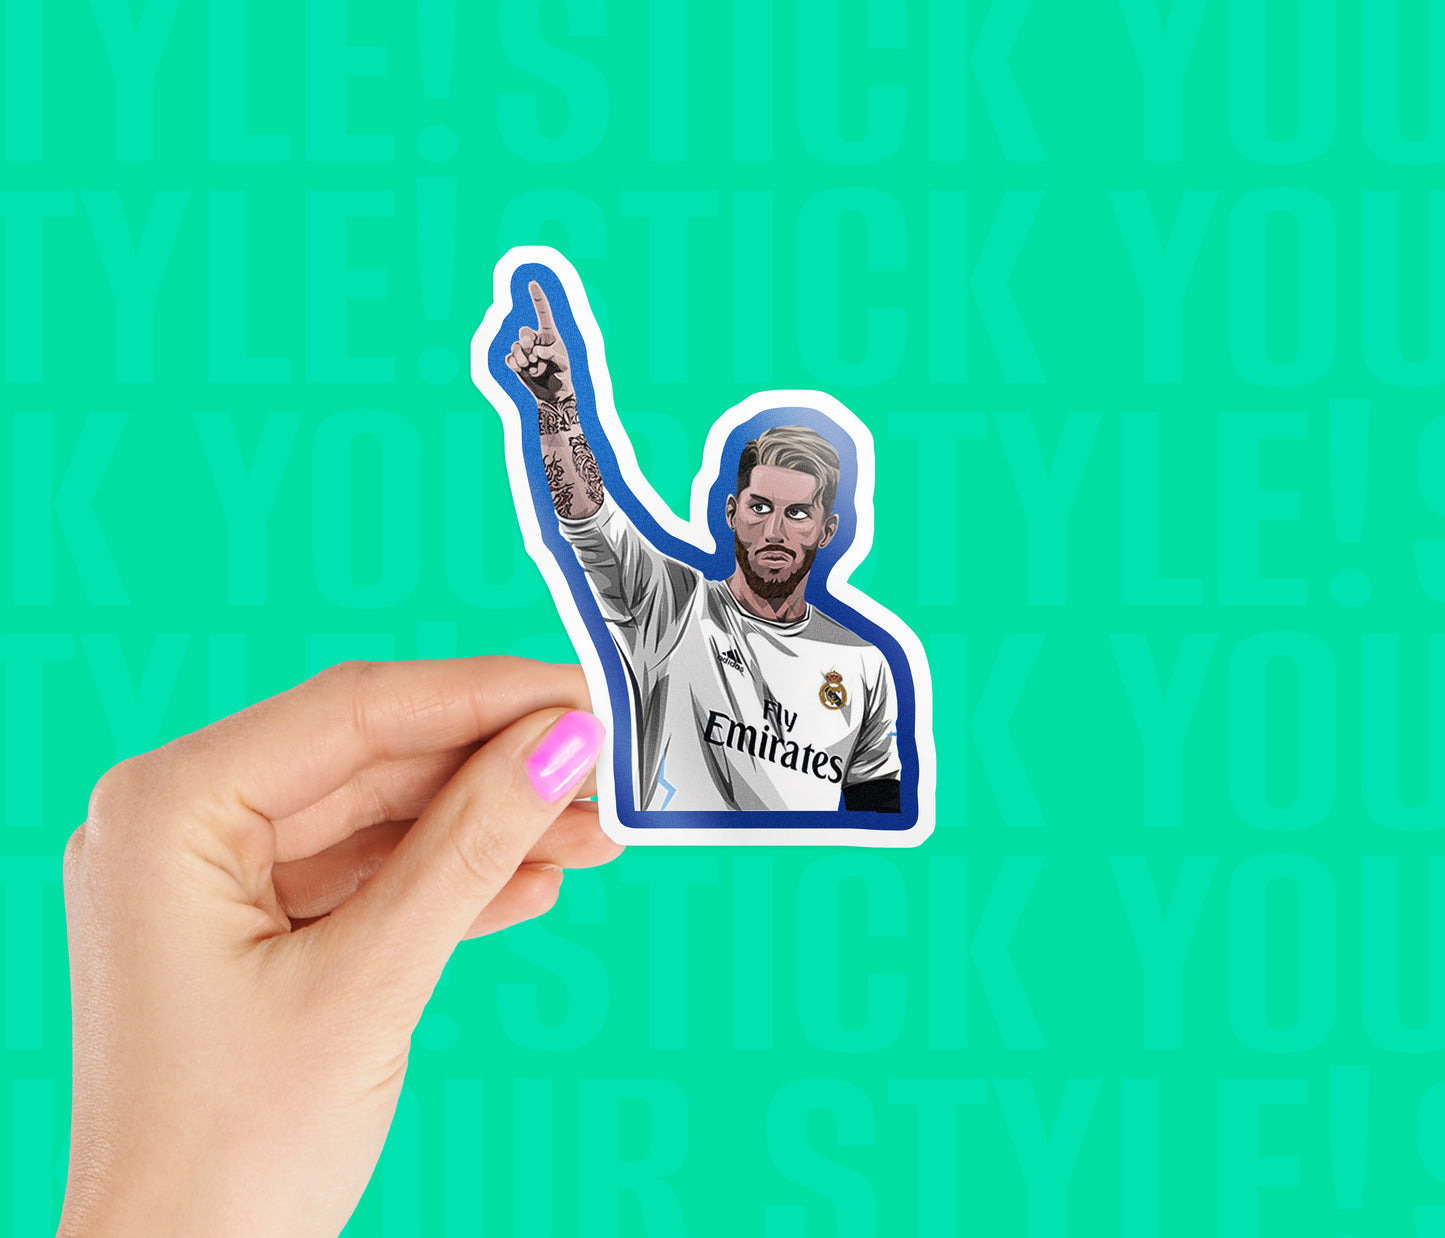 Sergio Ramos Soccer Sticker